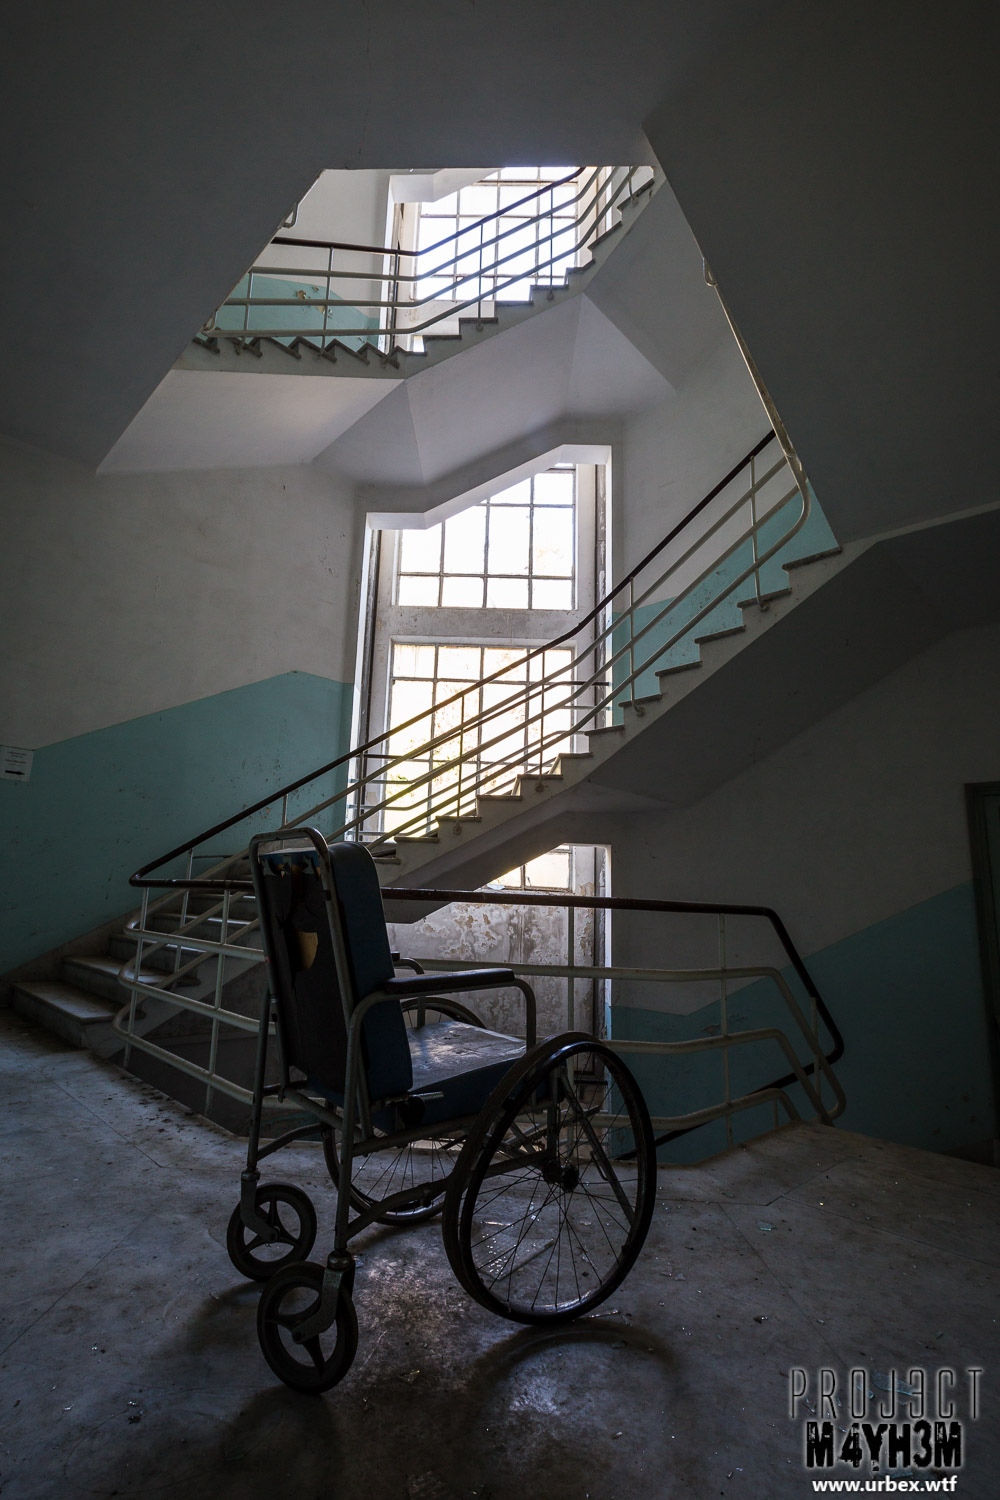 Hospital SC - The Hexagonal Staircase